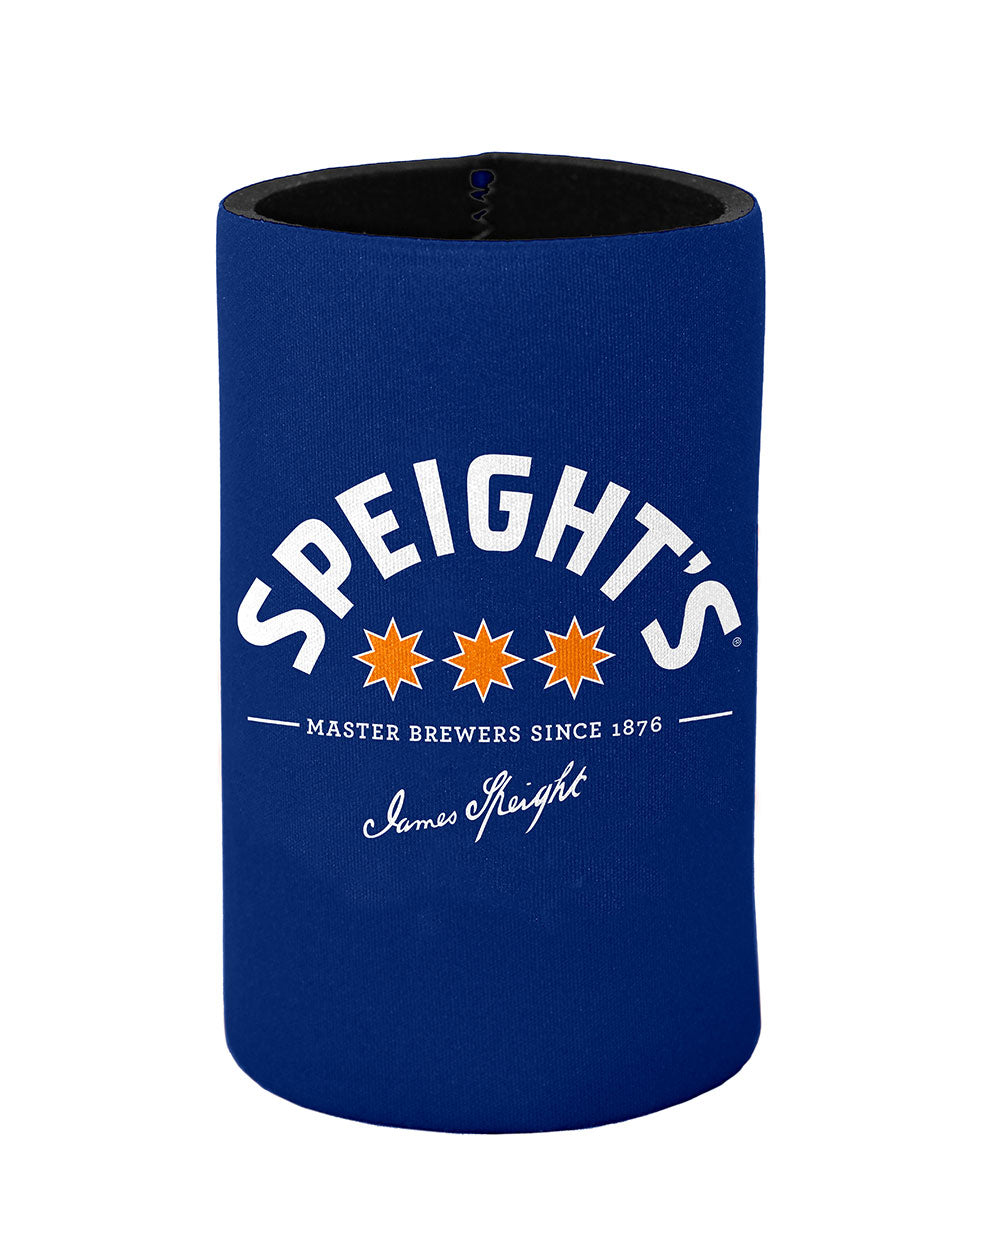 Speight's Quart Holder -  Beer Gear Apparel & Merchandise - Speights - Lion Red - VB - Tokyo Dy merch